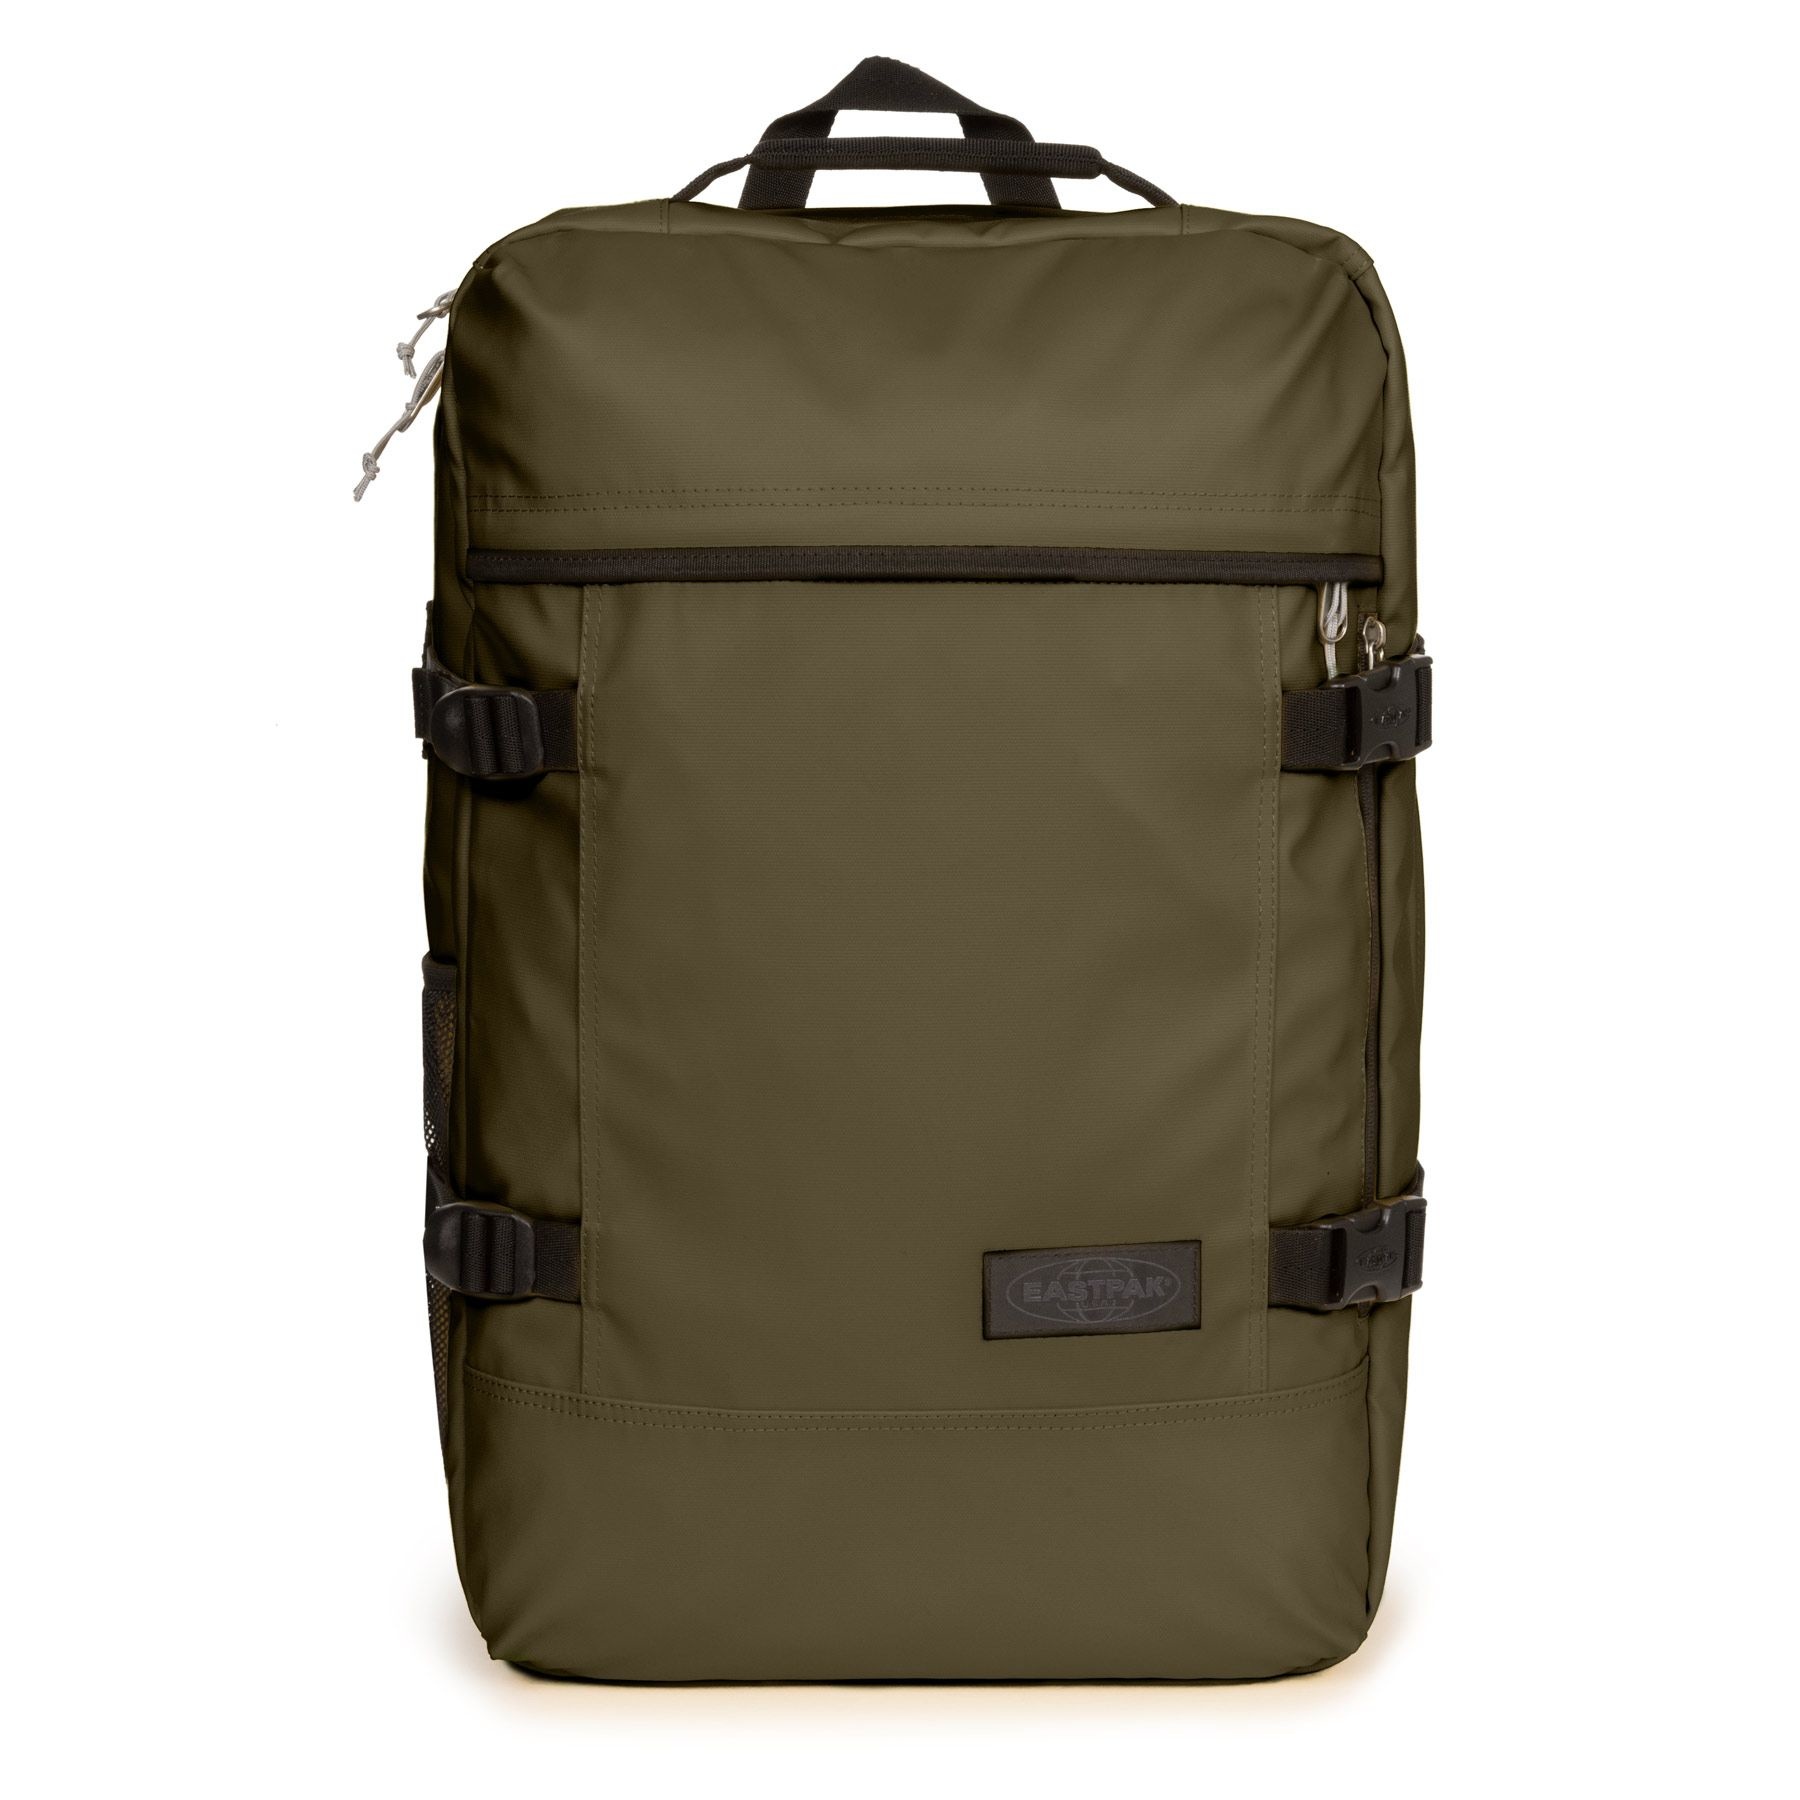 Eastpak Eastpak Travelpack - handbagage rugzak - Tarp Army